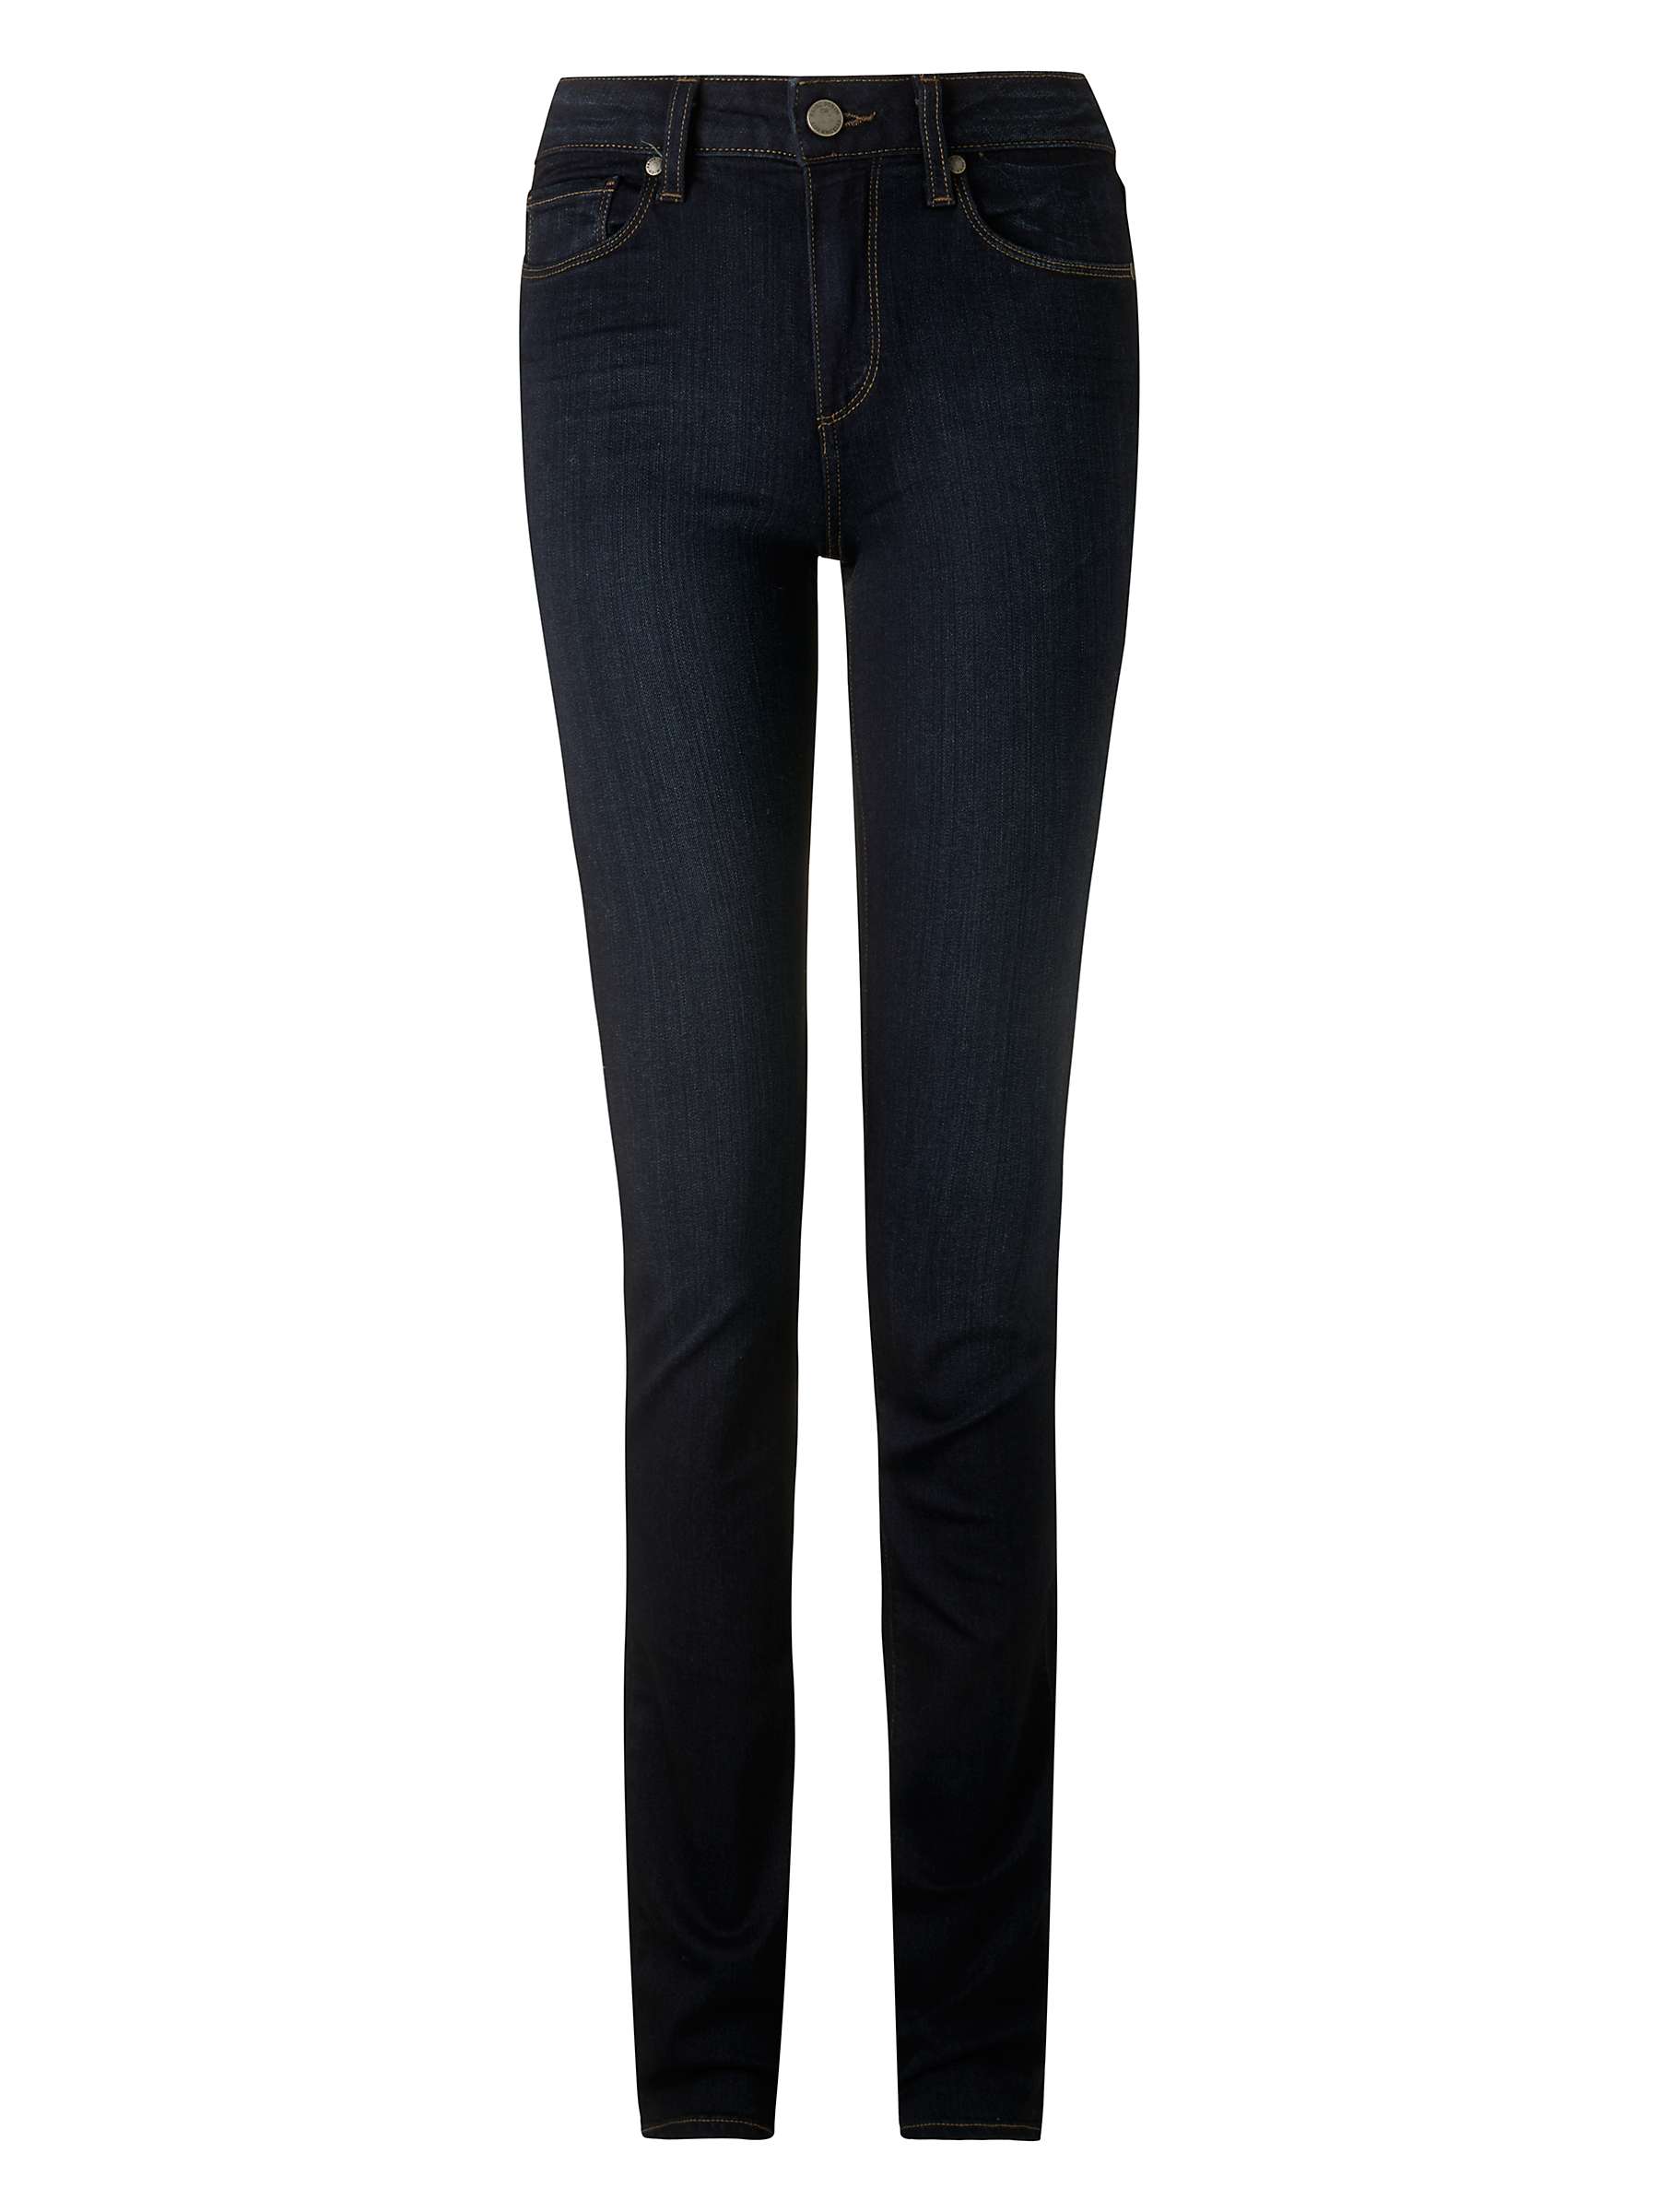 Buy PAIGE Hoxton Straight Leg Jeans, Mona Online at johnlewis.com